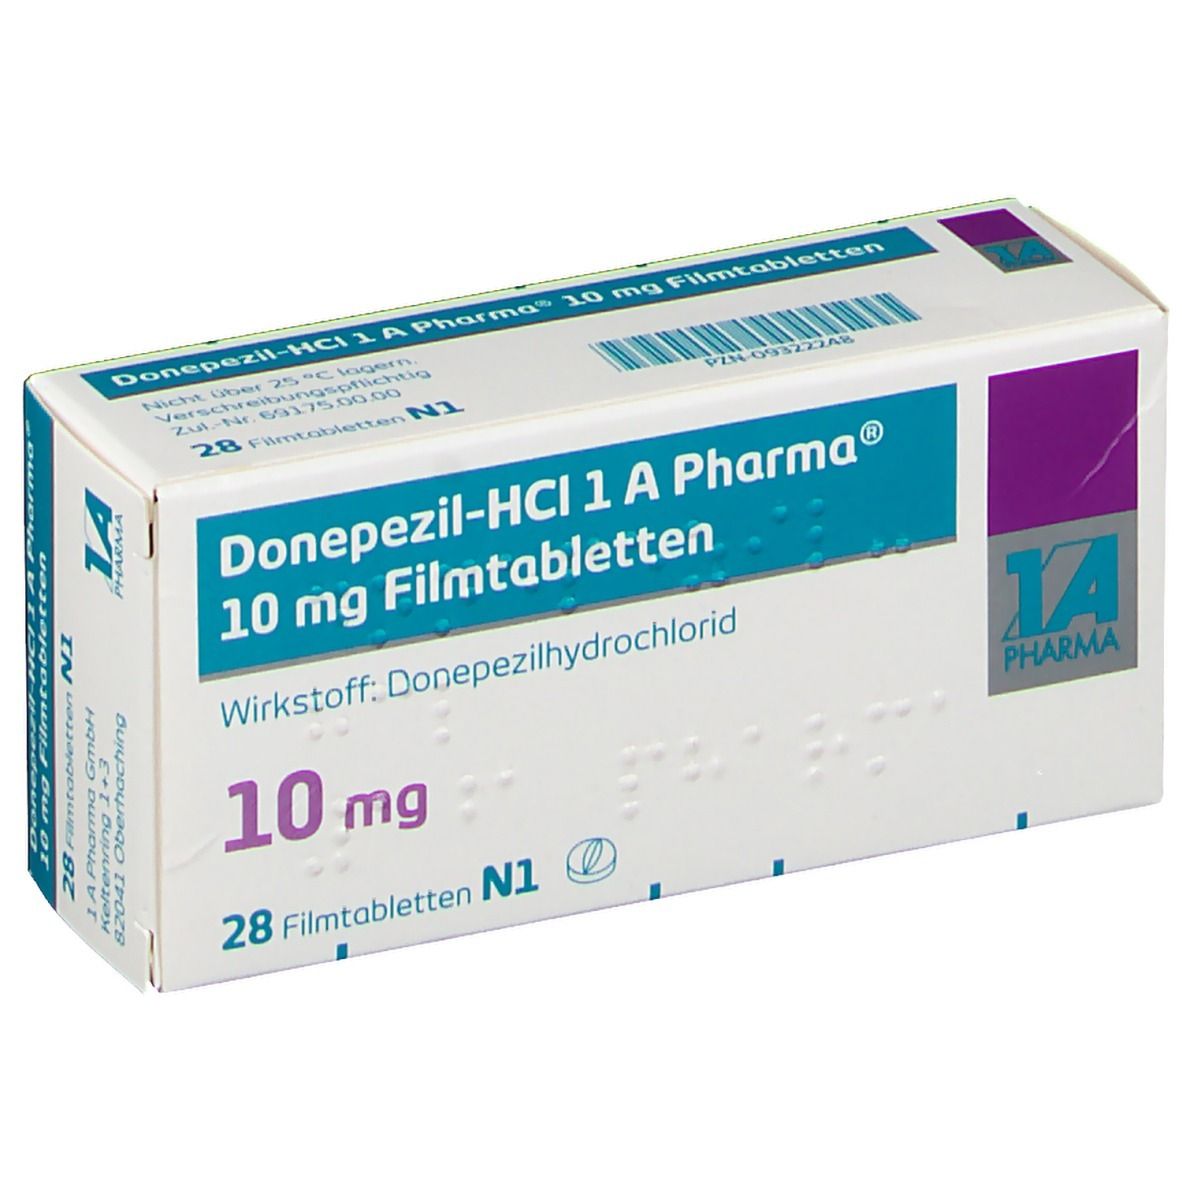 Donepezil-HCl - 1 A Pharma® 10 mg